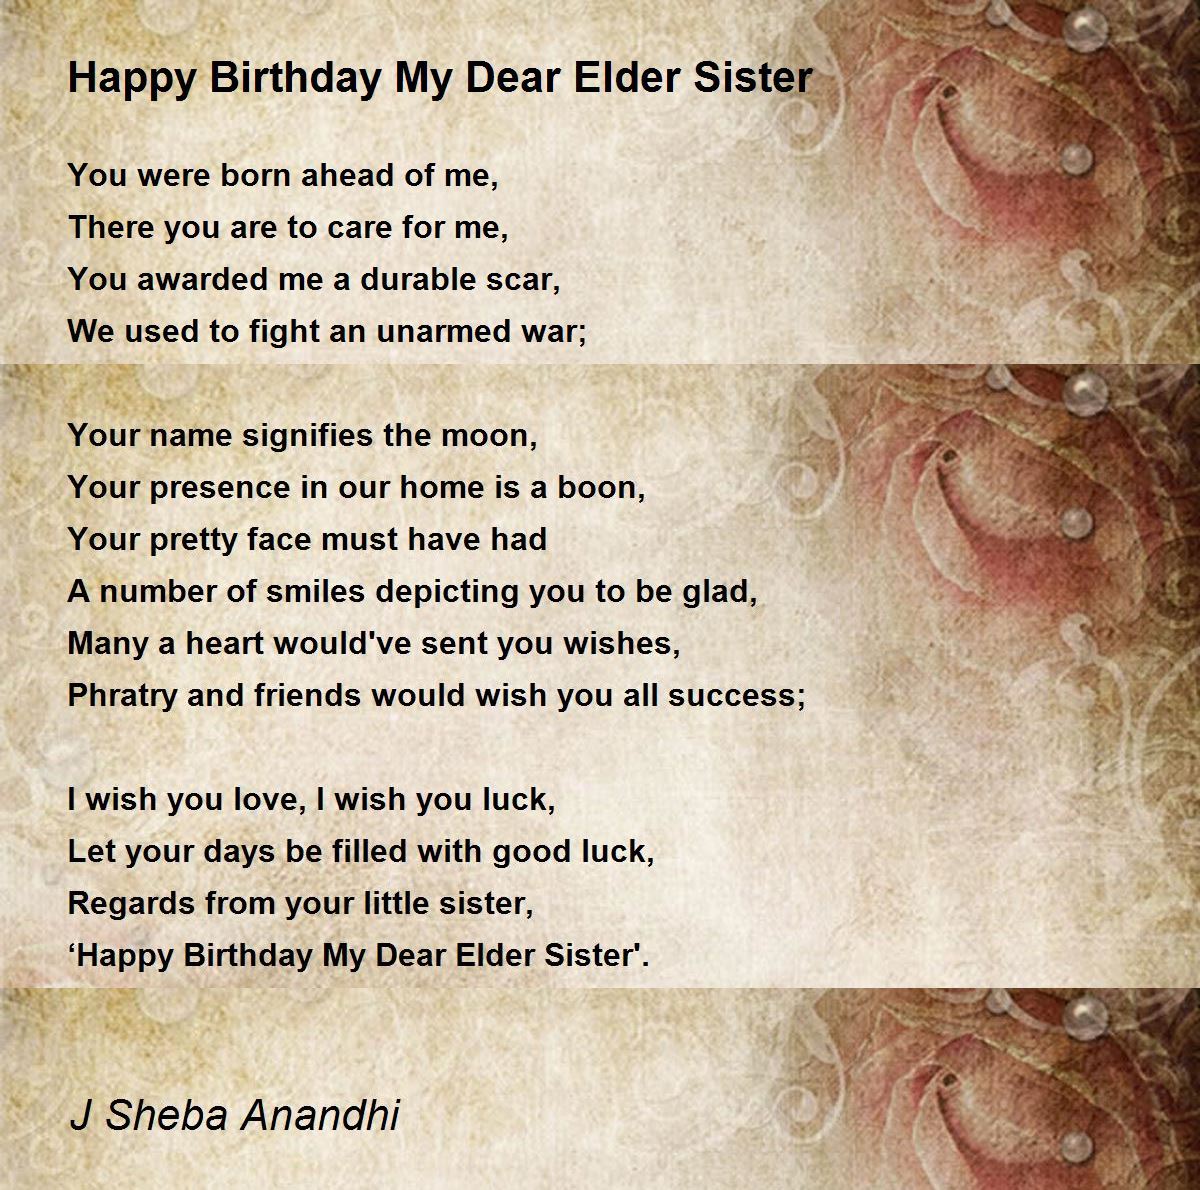 Dear older sister